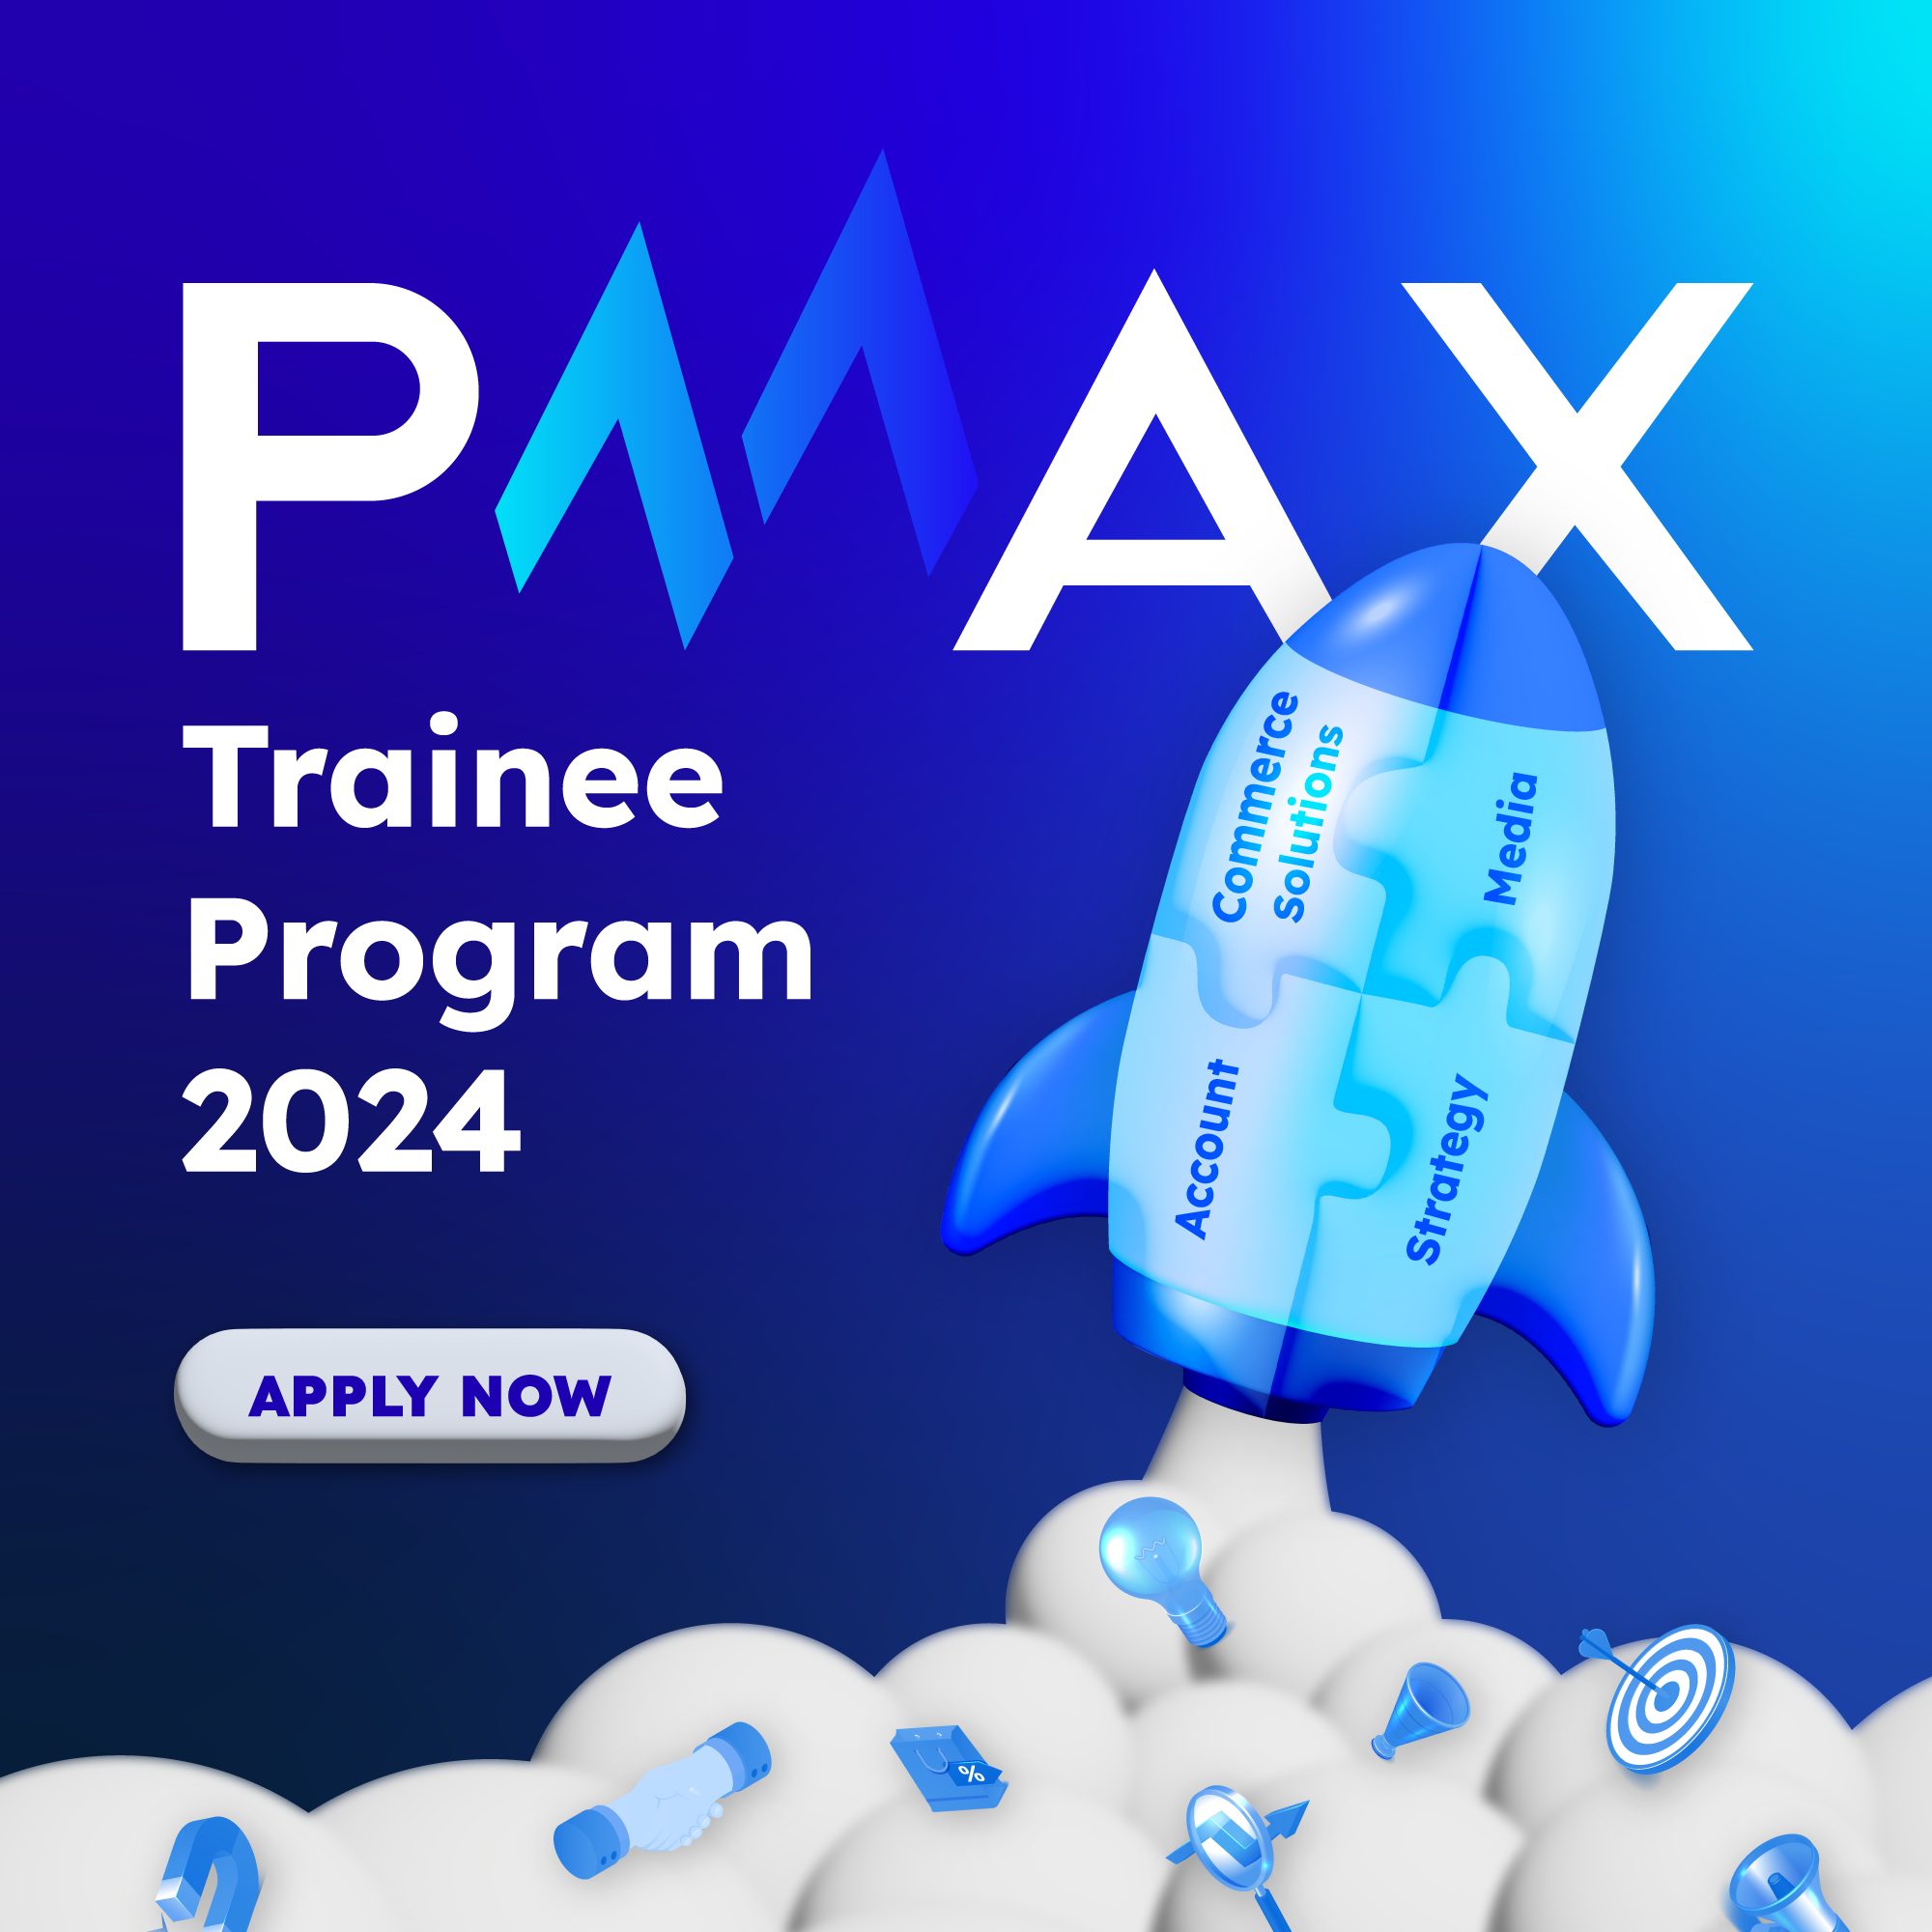 PMAX - Total Performance Marketing